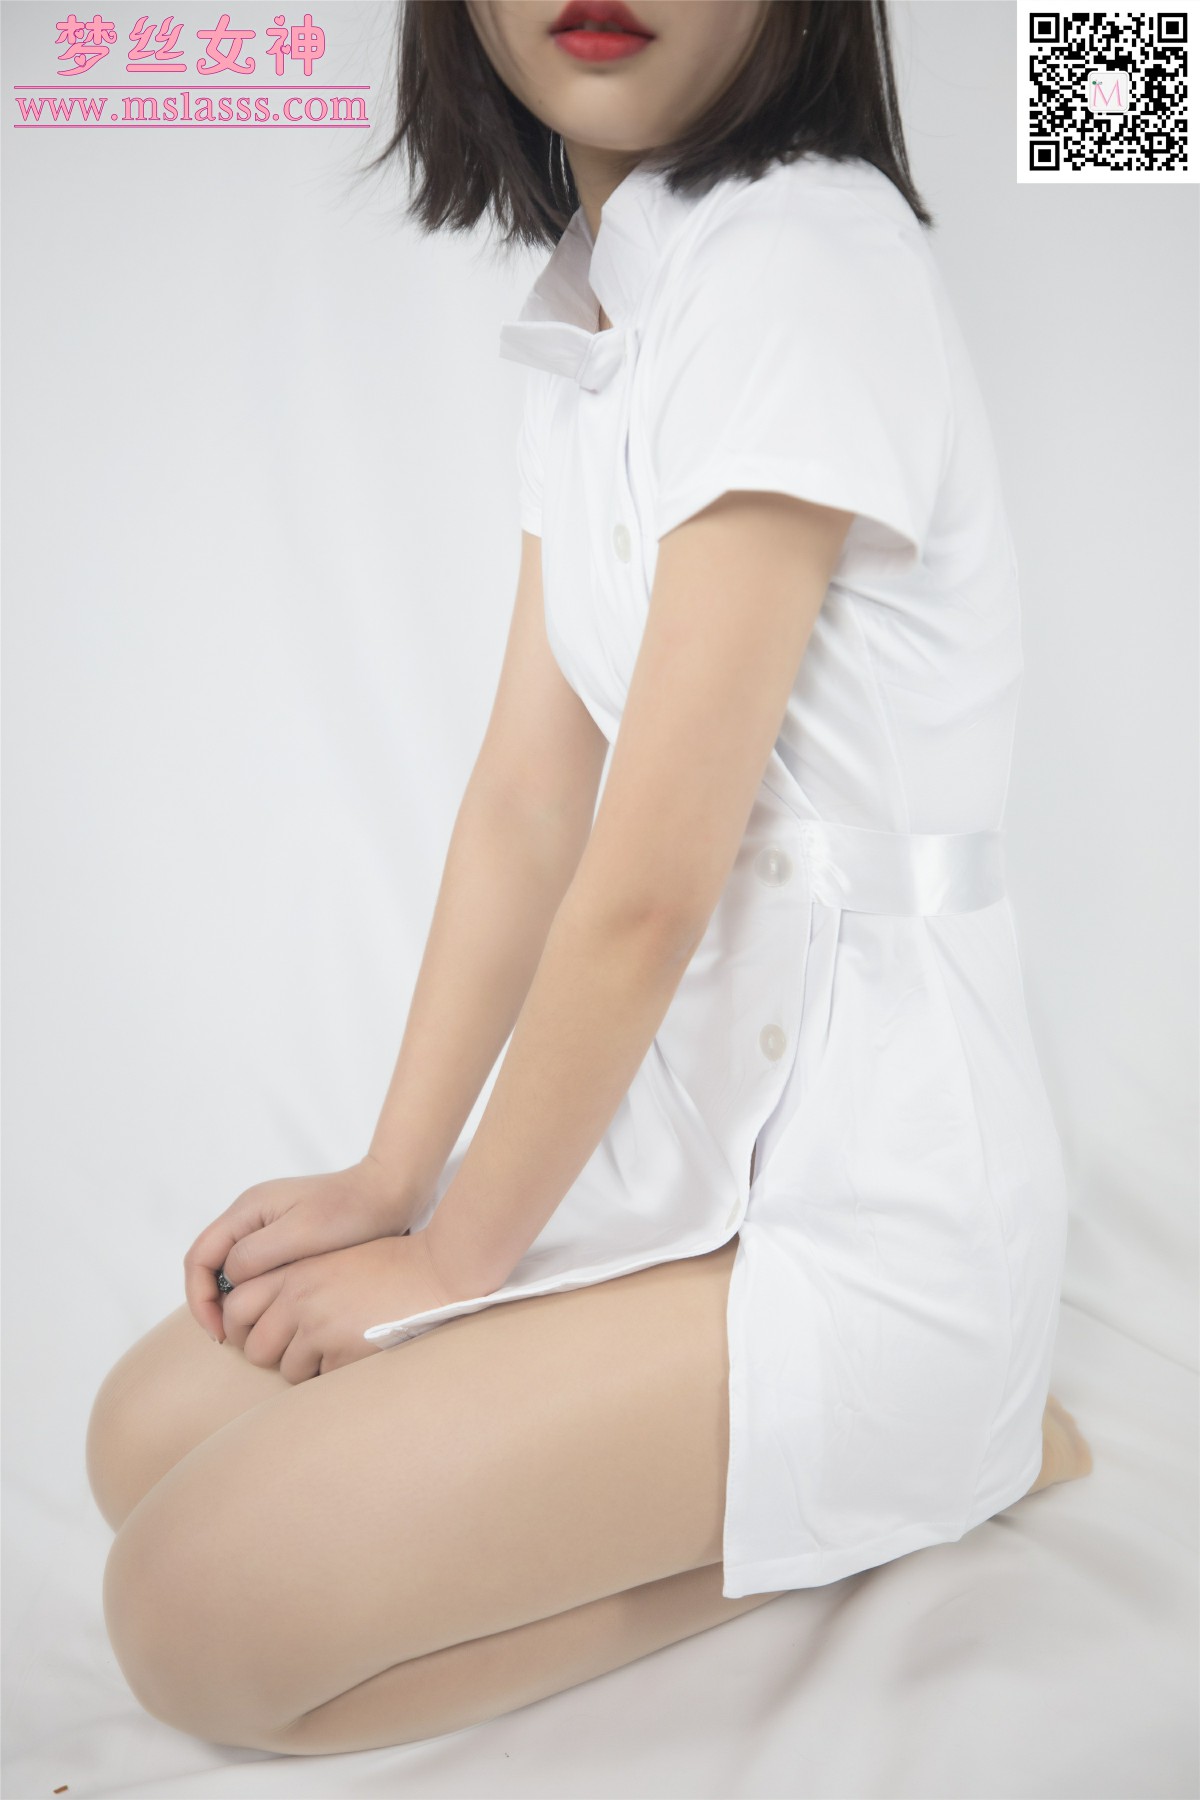 [MSLASS]梦丝女神 - 米线 连裤袜的小私房 (3).jpg